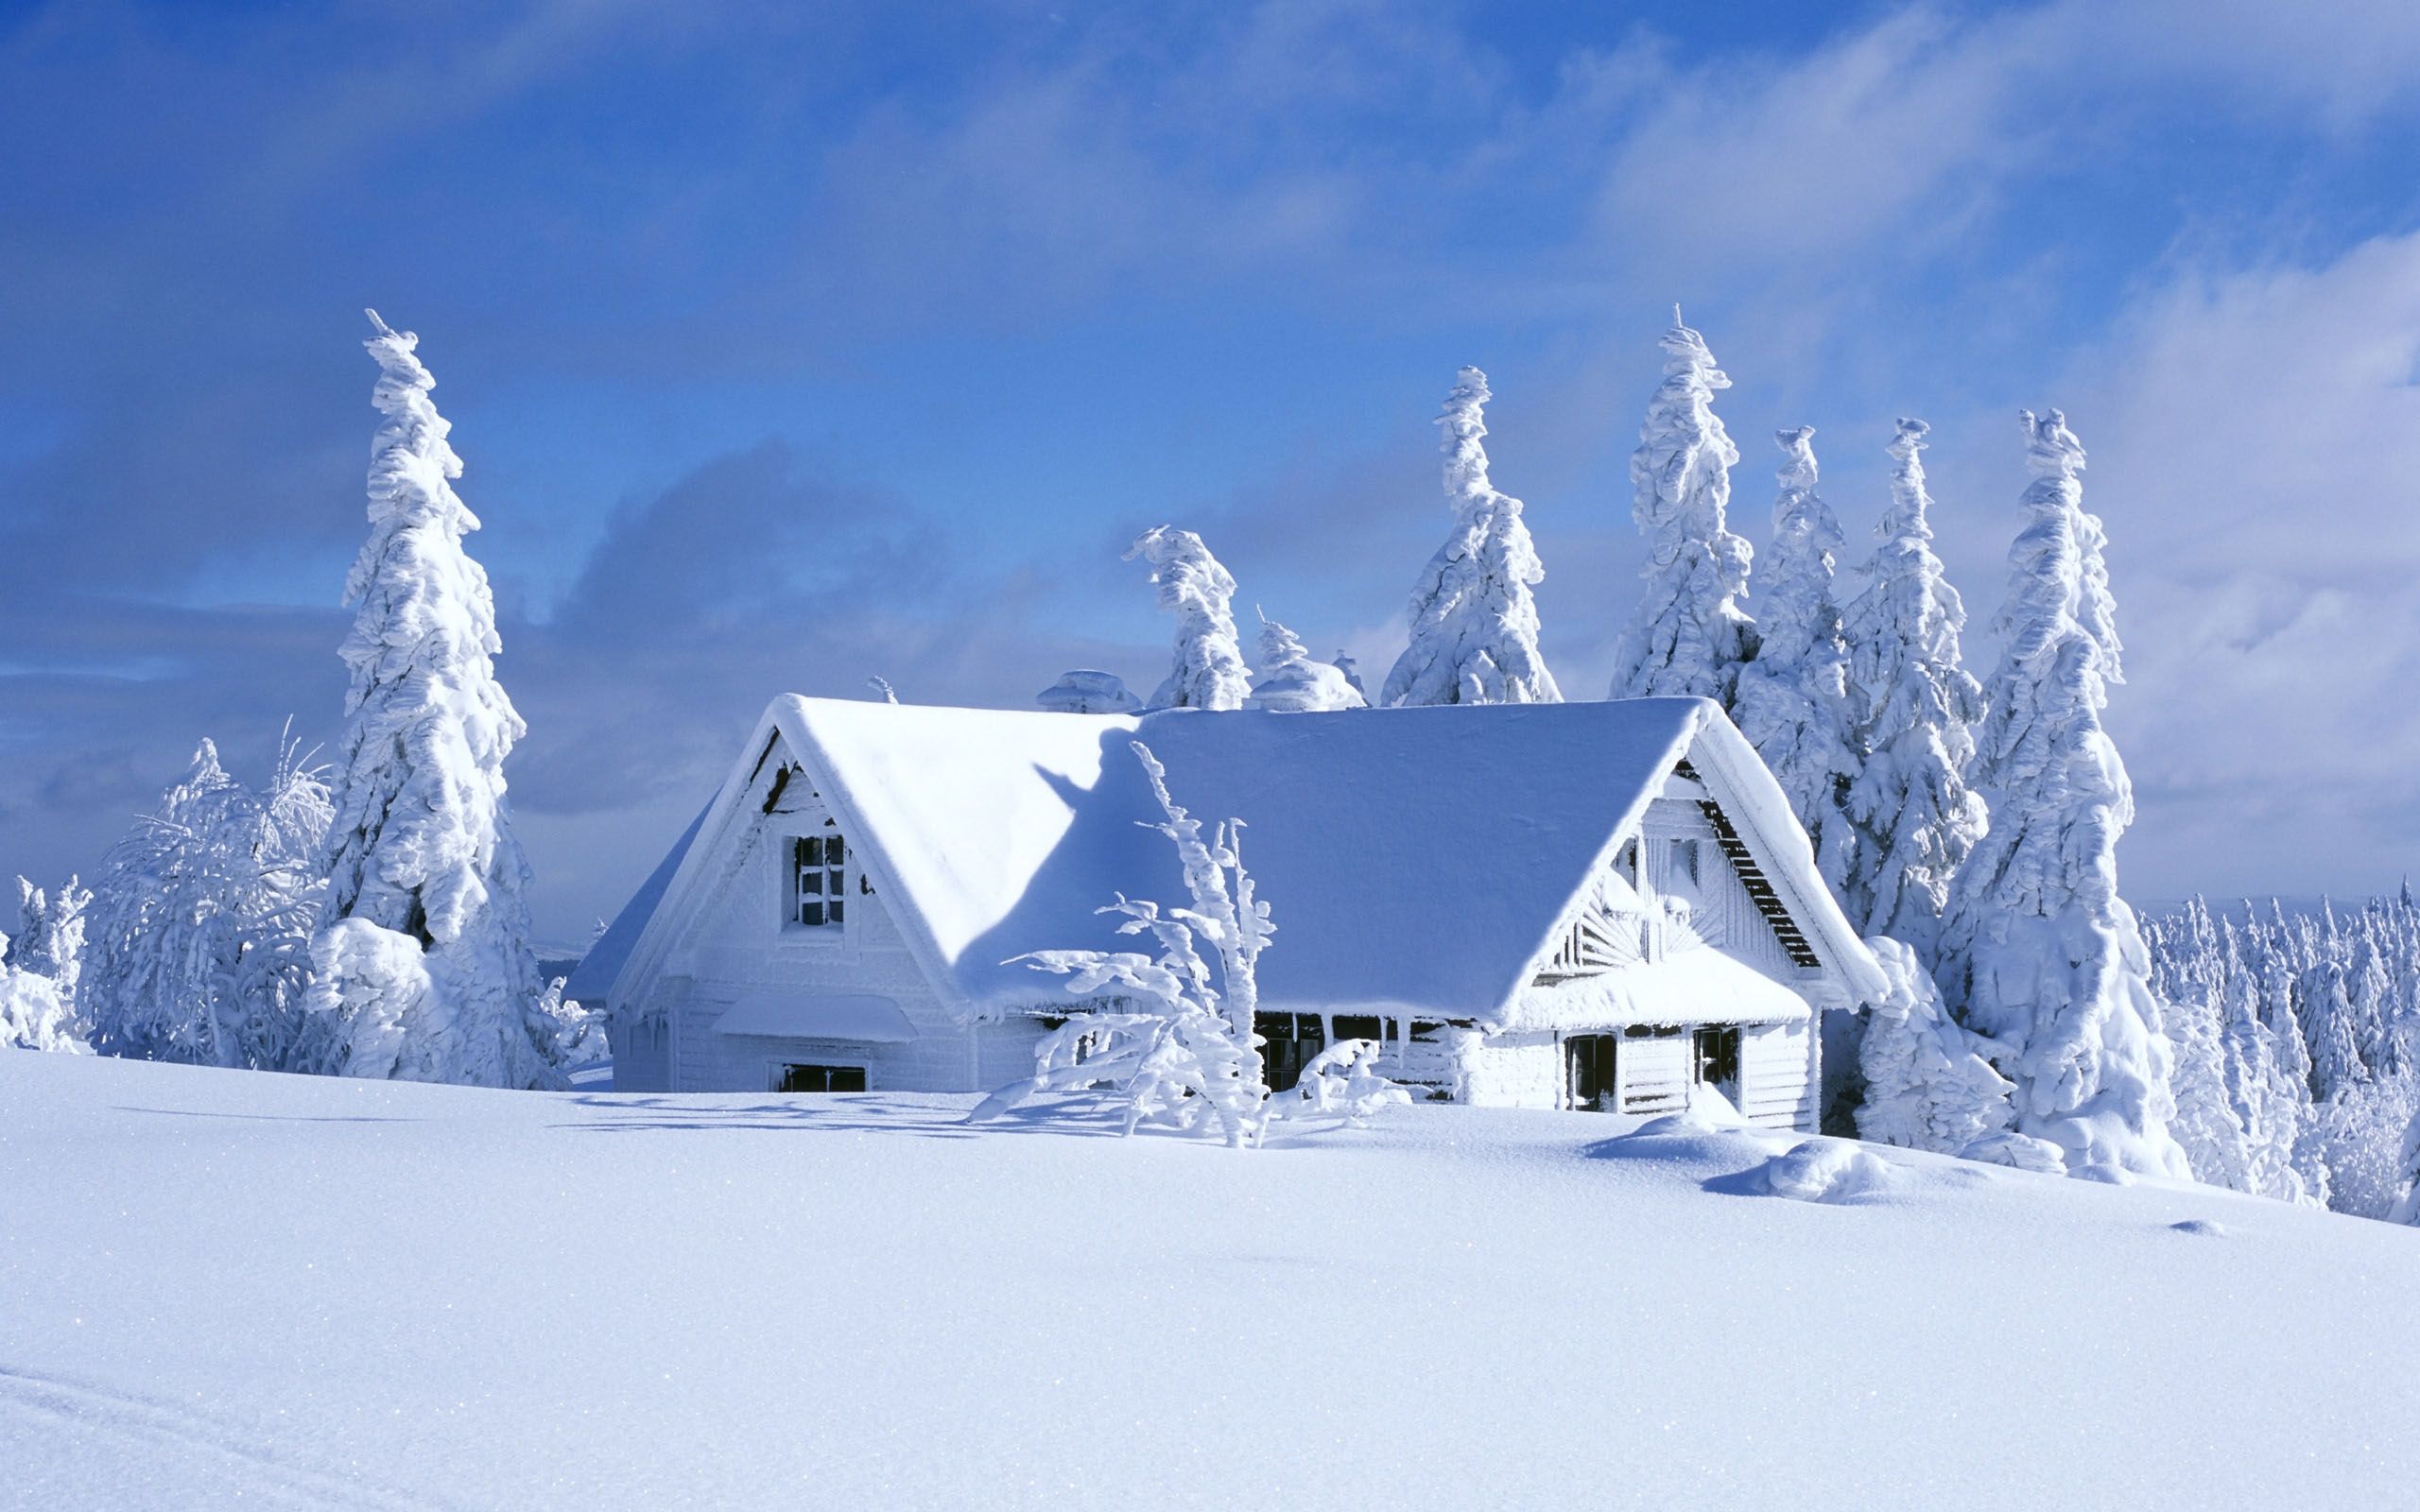 Winter Backgrounds for Desktop Wallpapers, Backgrounds, Images